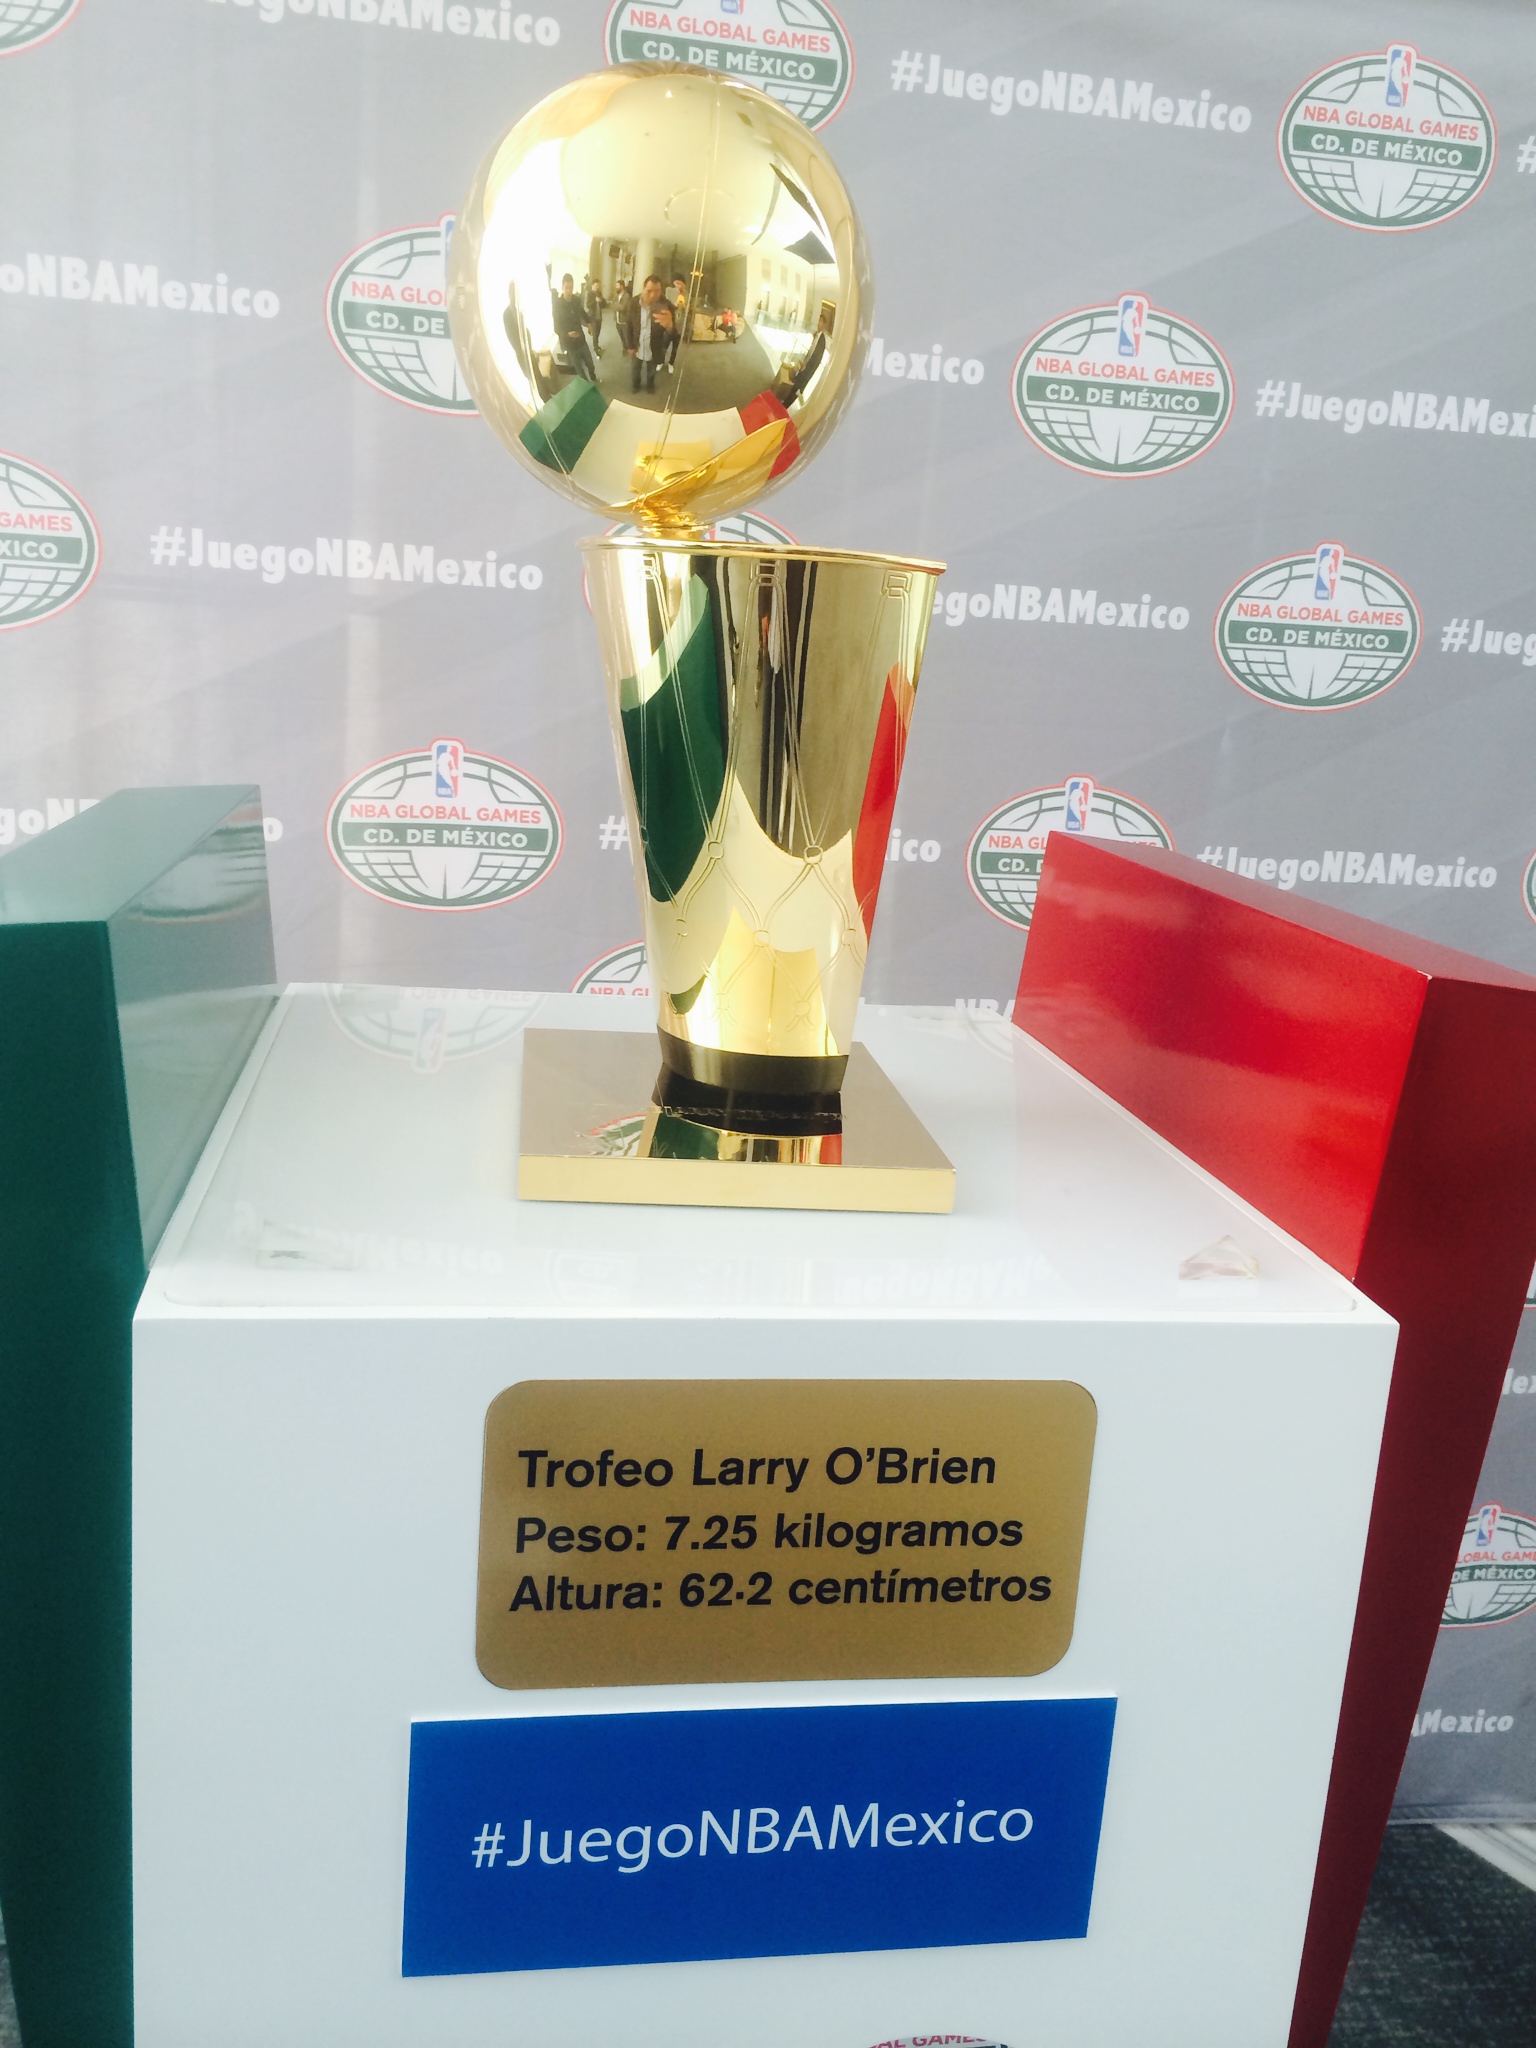 viva básquet visita del trofeo Larry O’Brien selfie tour 2014